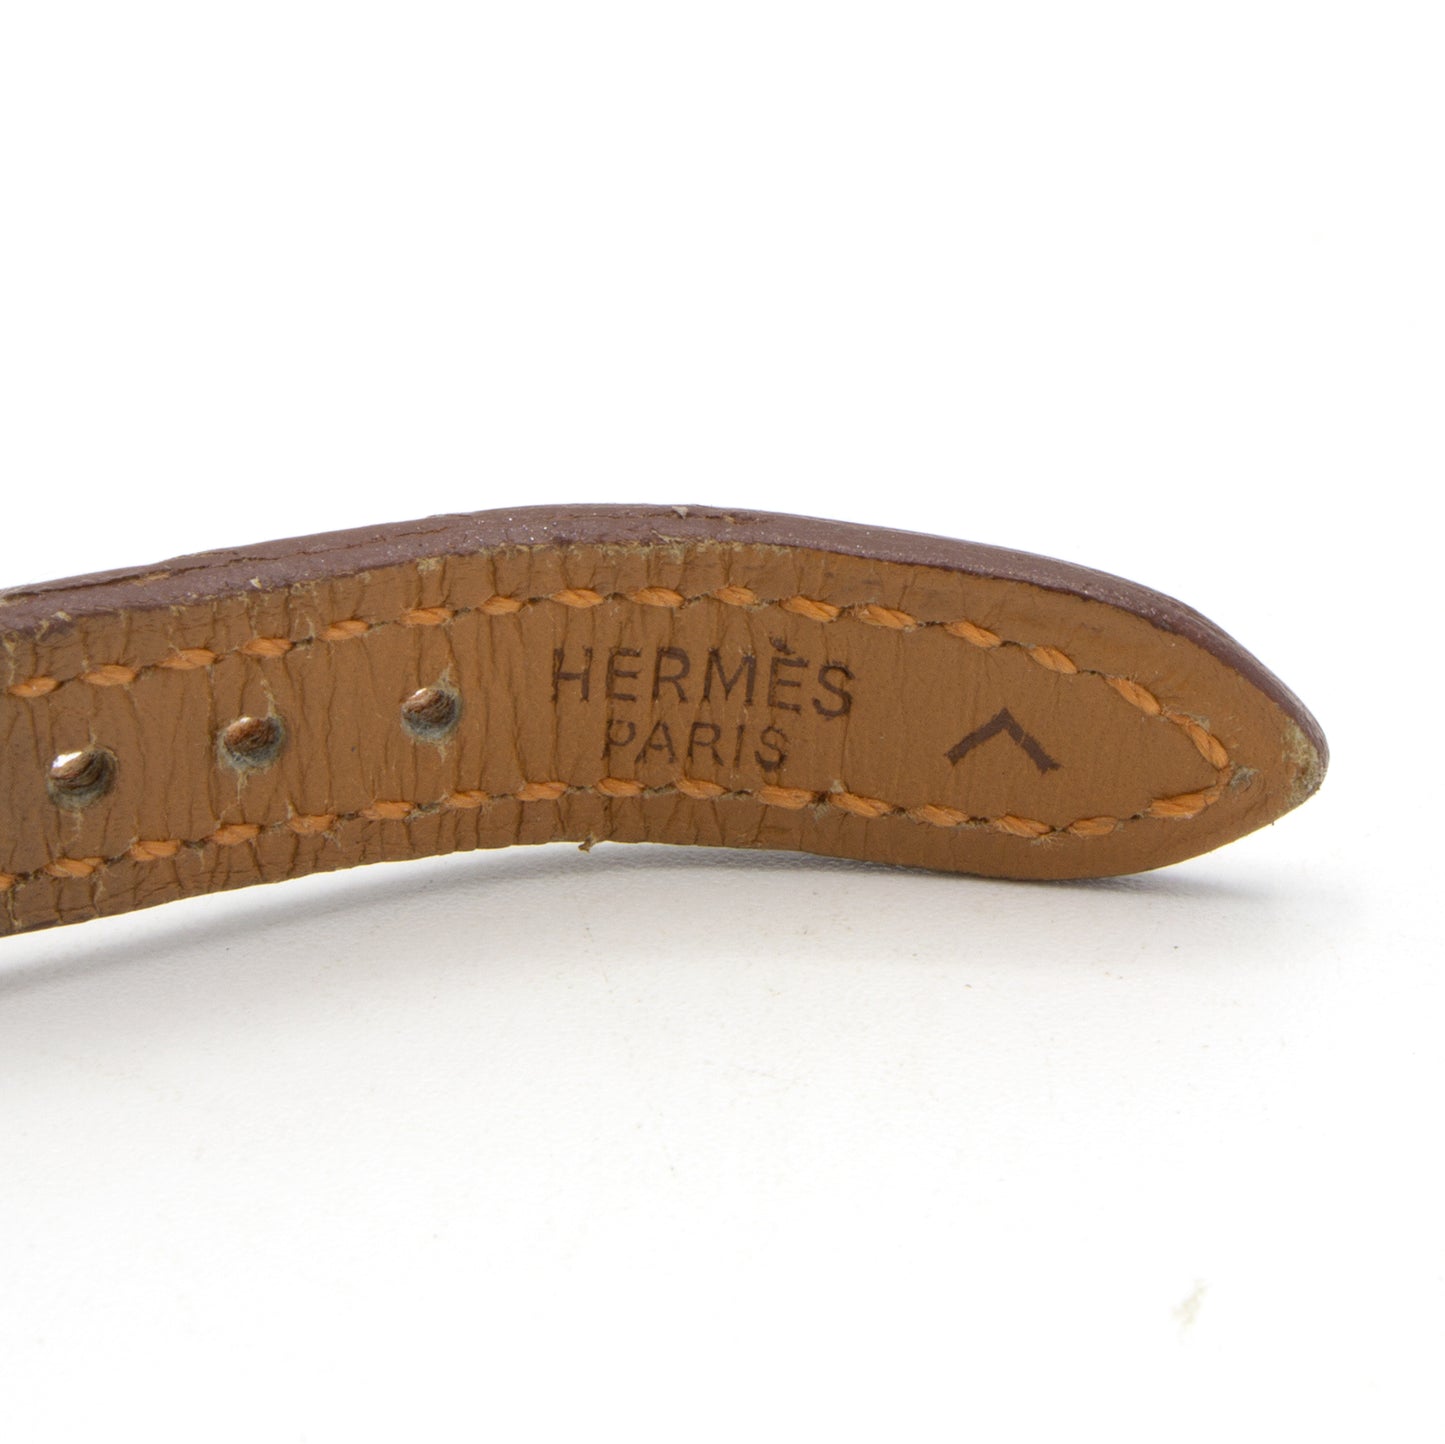 Hermès Cape Cod CC1.185 18K watch